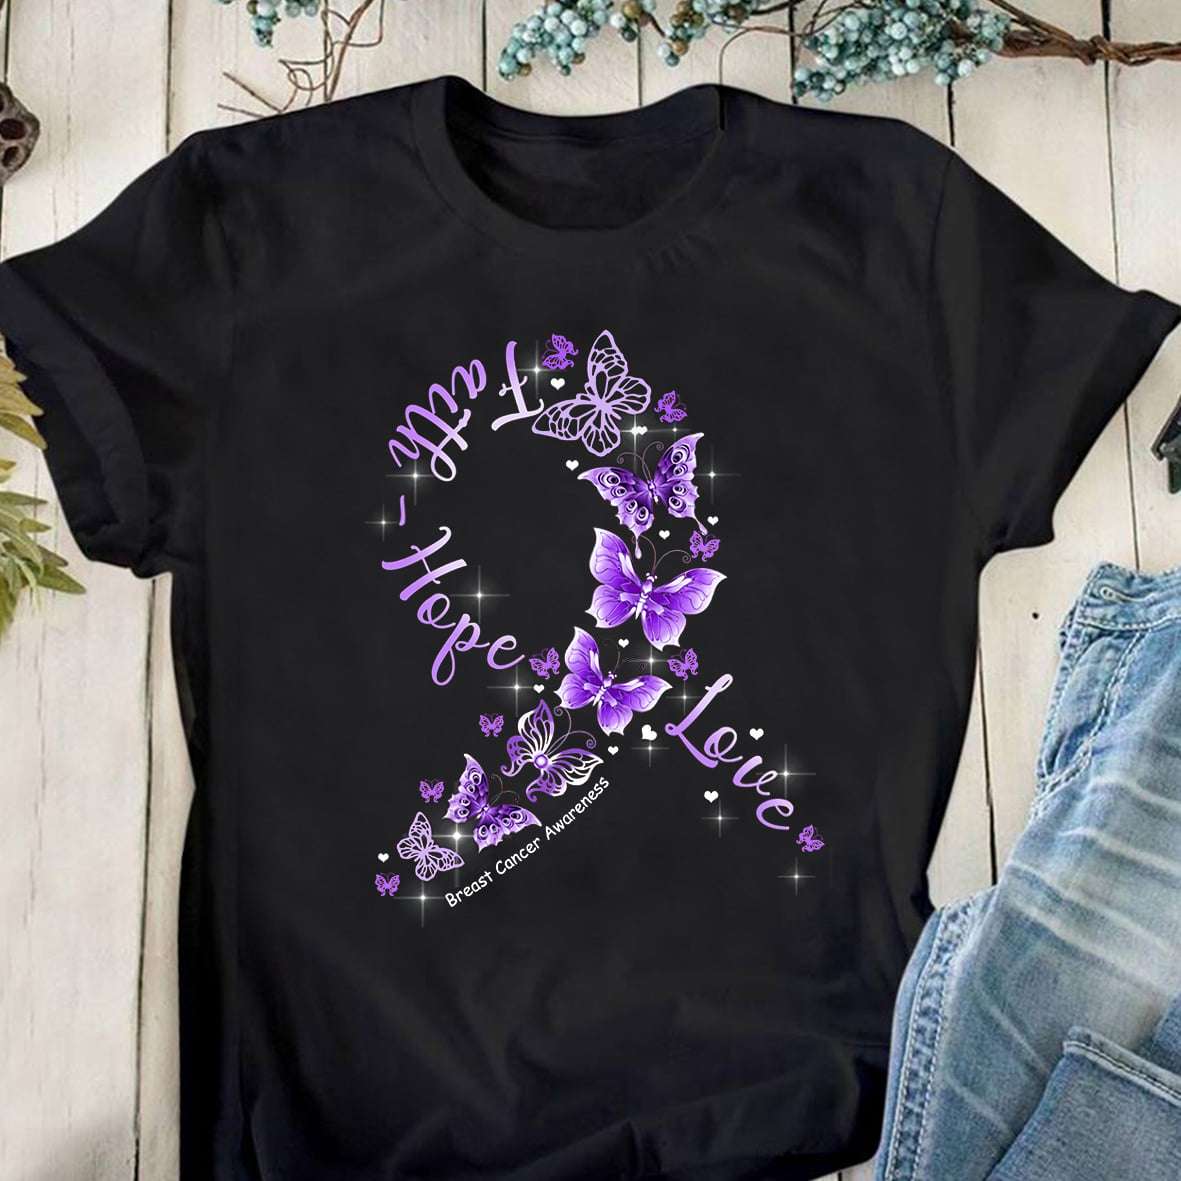 Faith hope love - Breast cancer awarness, butterflies cancer ribbon shirt